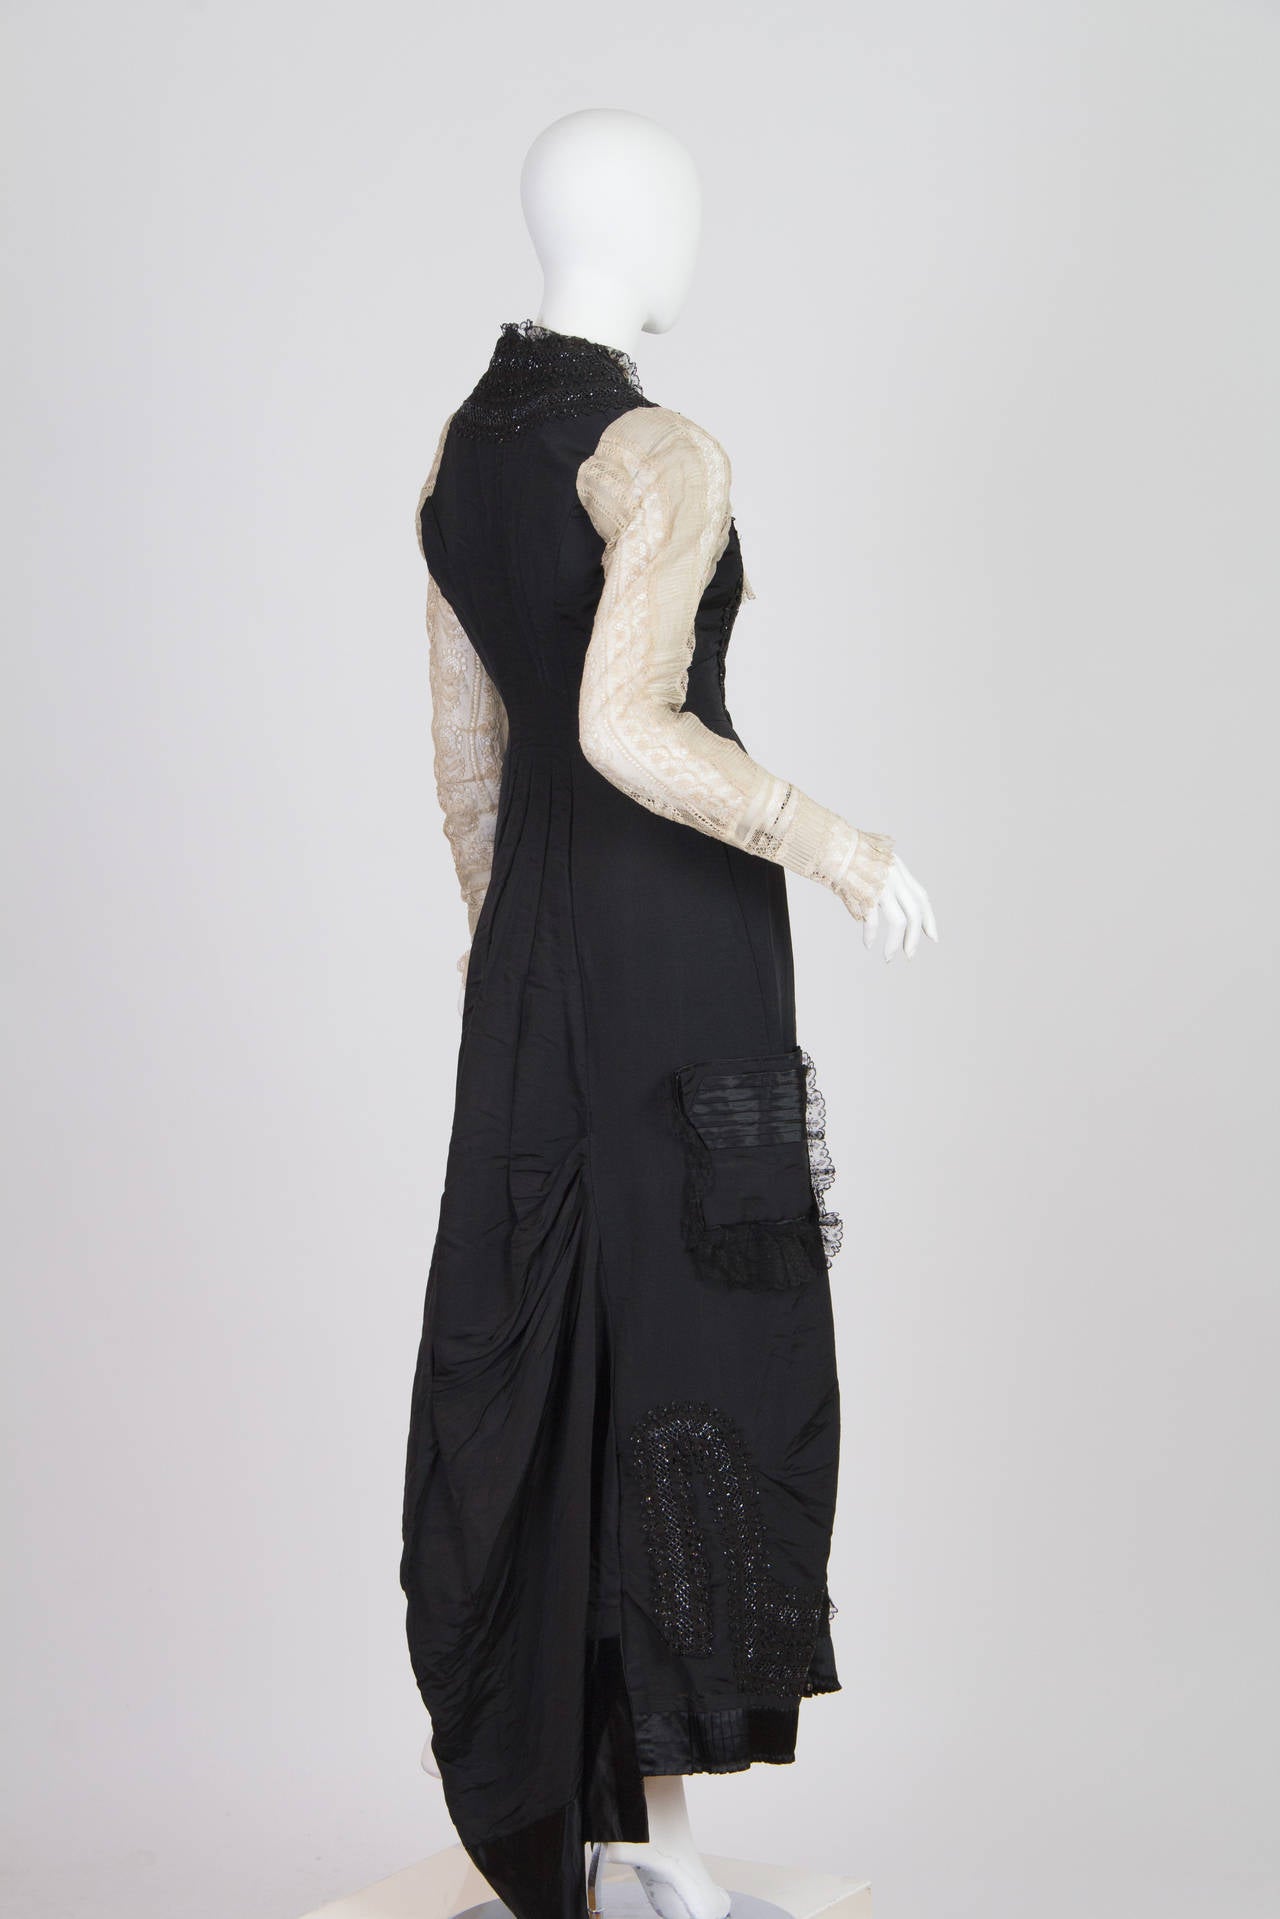 1880s dress